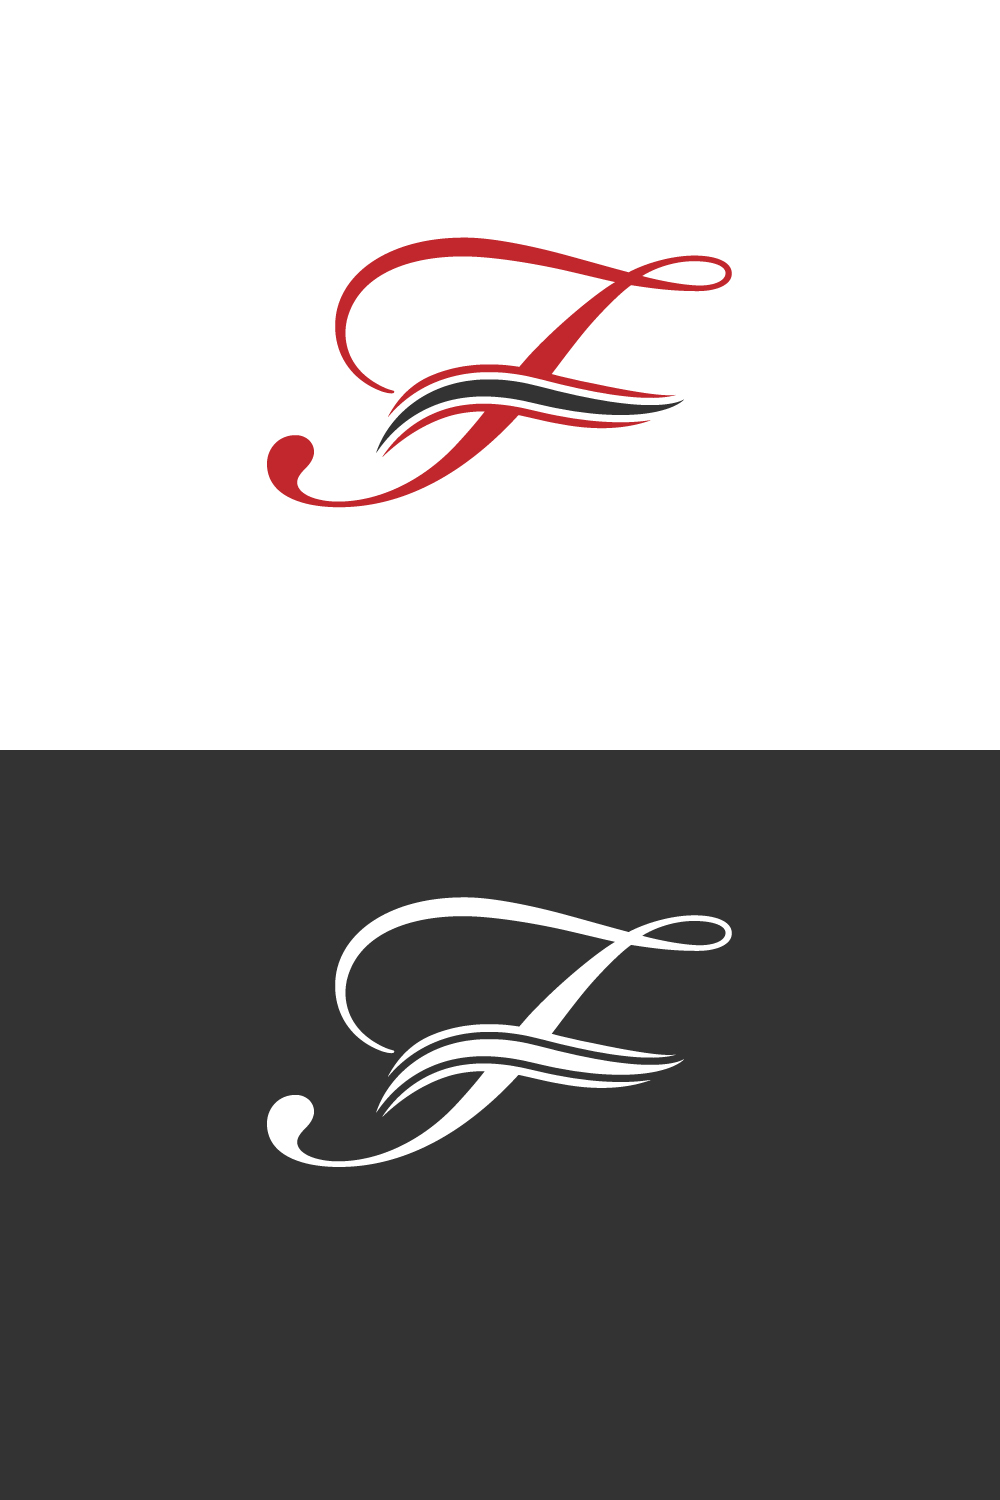 F logo pinterest preview image.